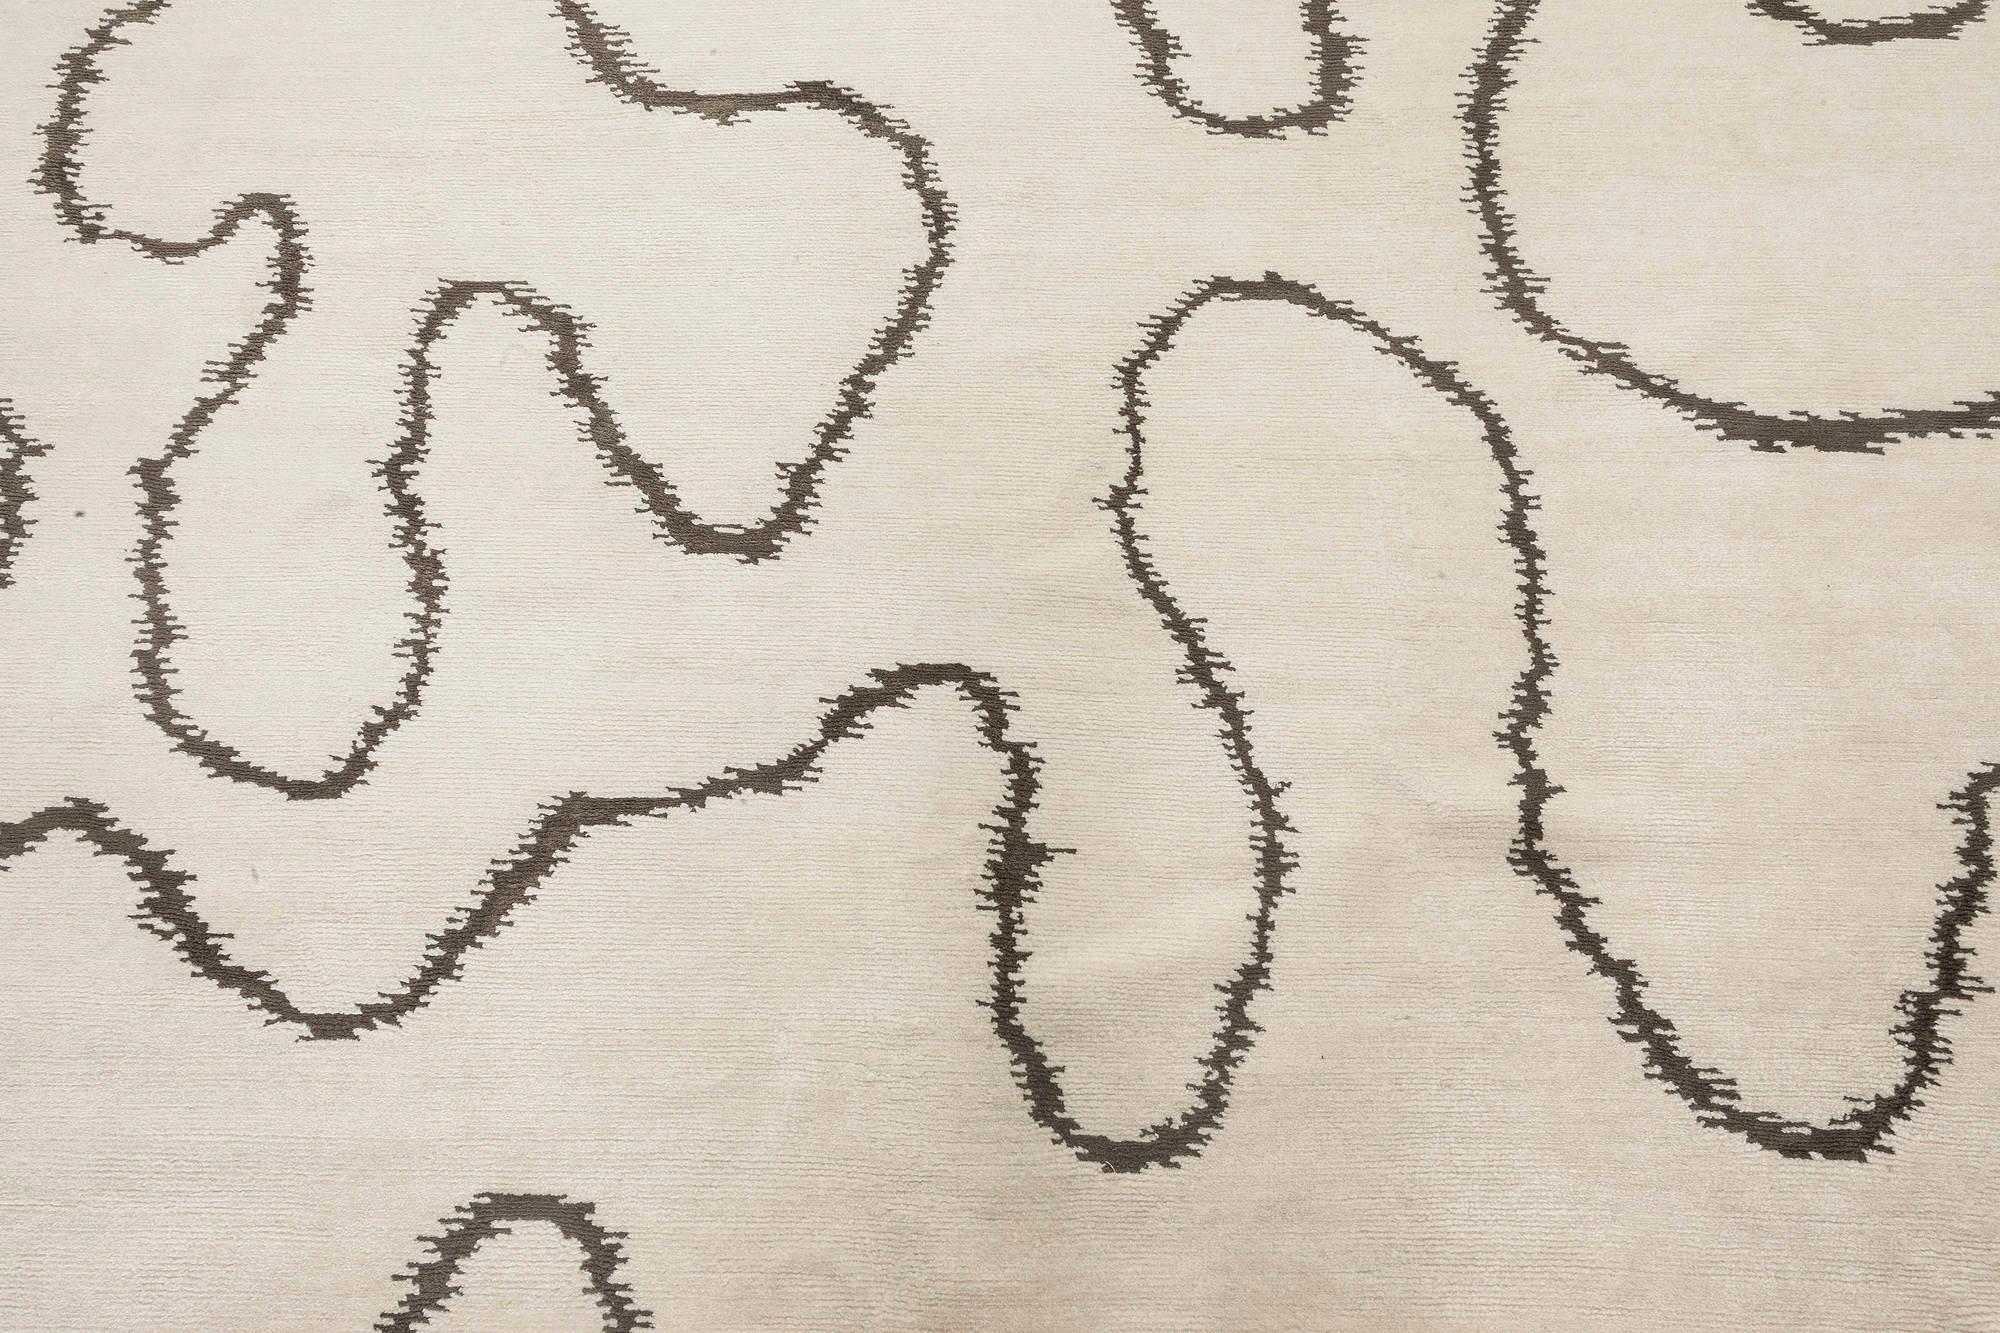 Contemporary ribbon design white handmade wool rug by Doris Leslie Blau
Size: 13'2